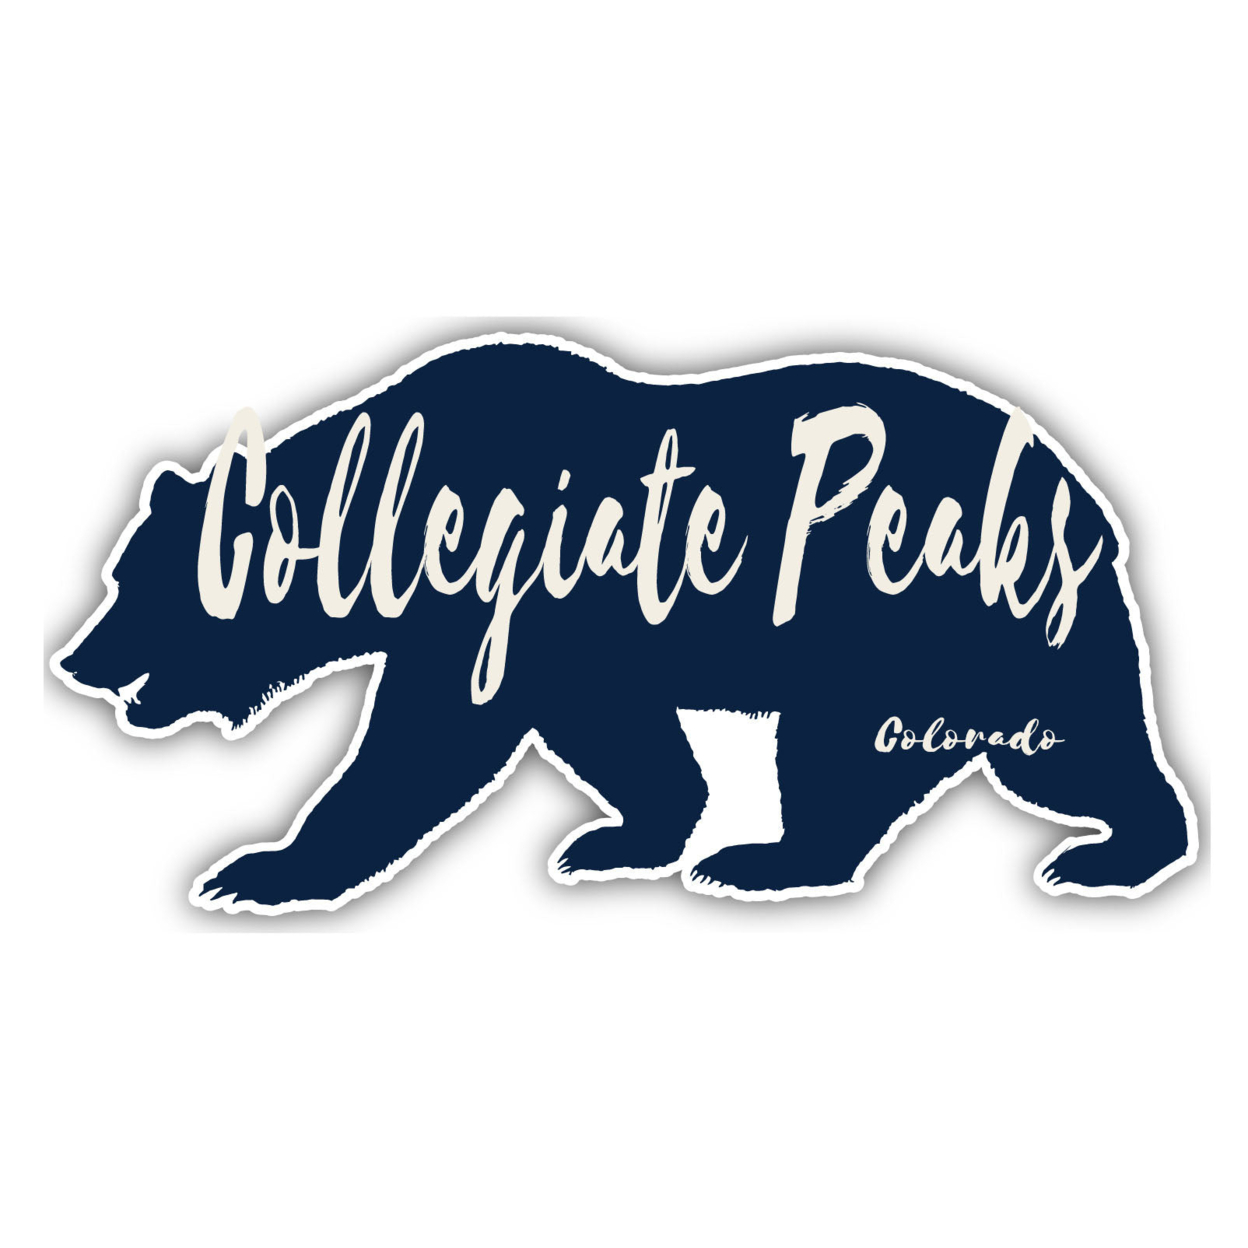 Collegiate Peaks Colorado Souvenir Decorative Stickers (Choose Theme And Size) - 4-Pack, 12-Inch, Bear